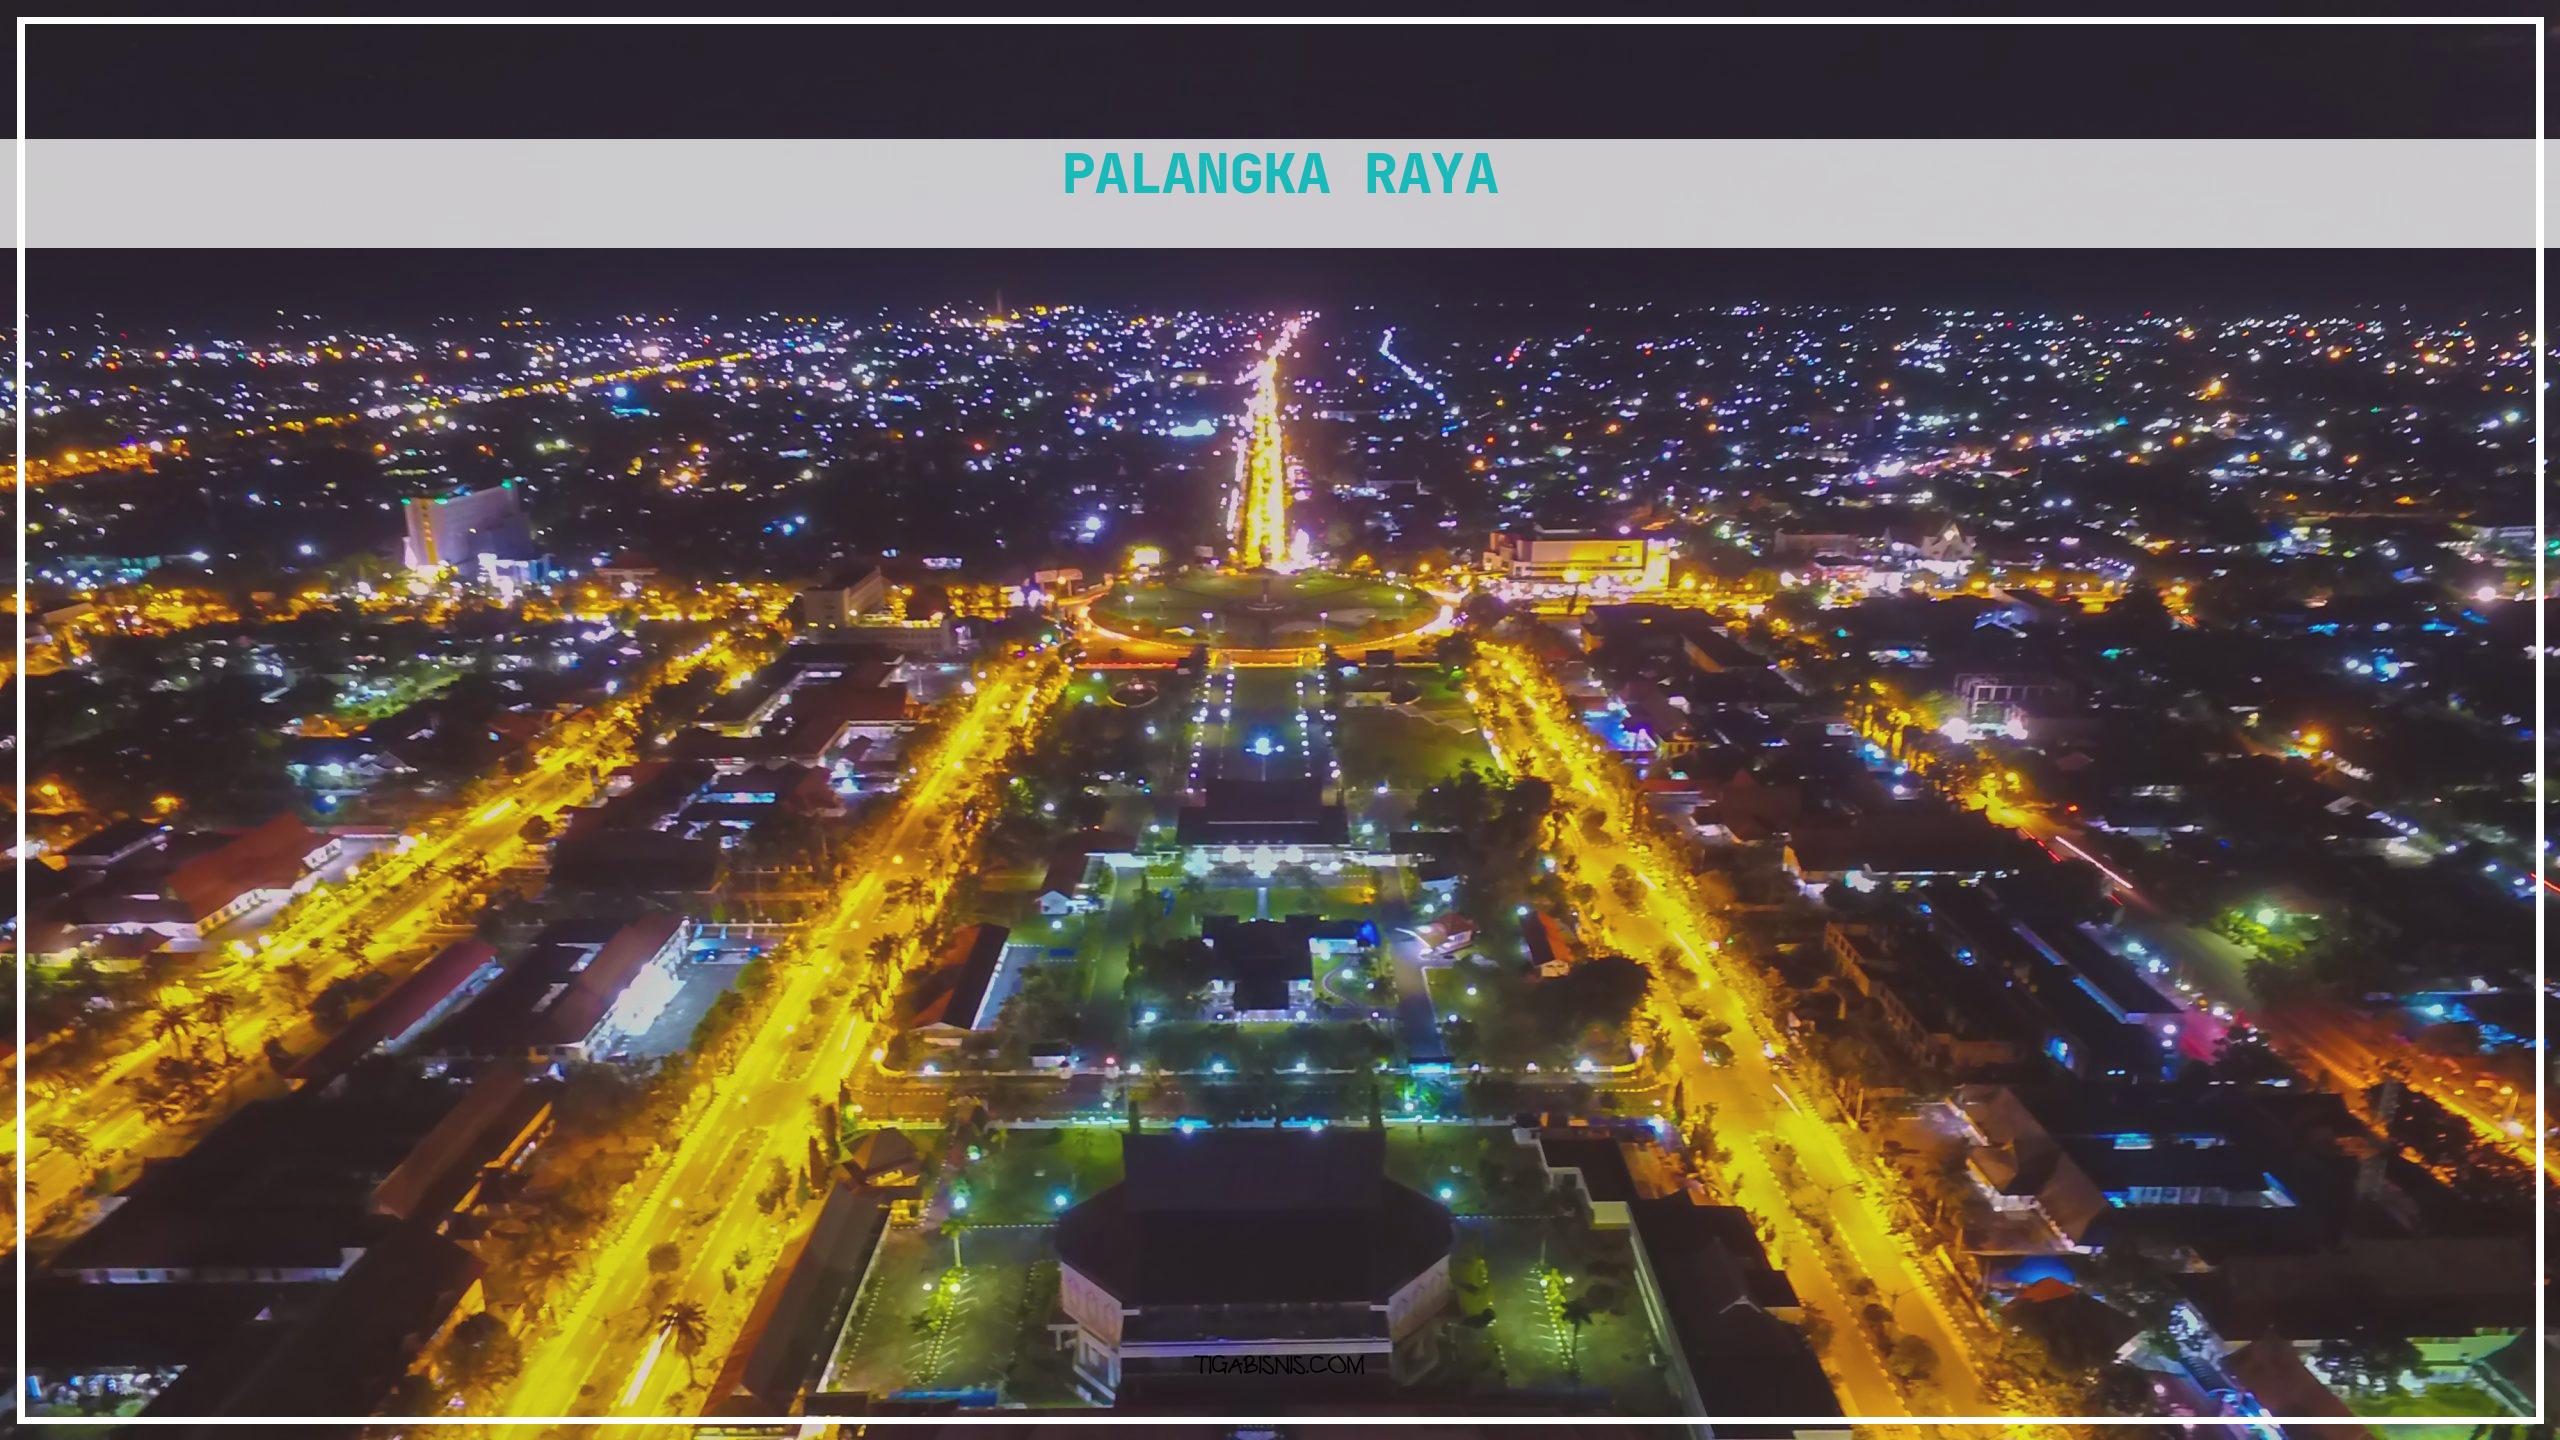 Info Lowongan Untuk area Palangka Raya . Sumber : Https://www.dronestagr.am/palangka-raya-city-at-night/